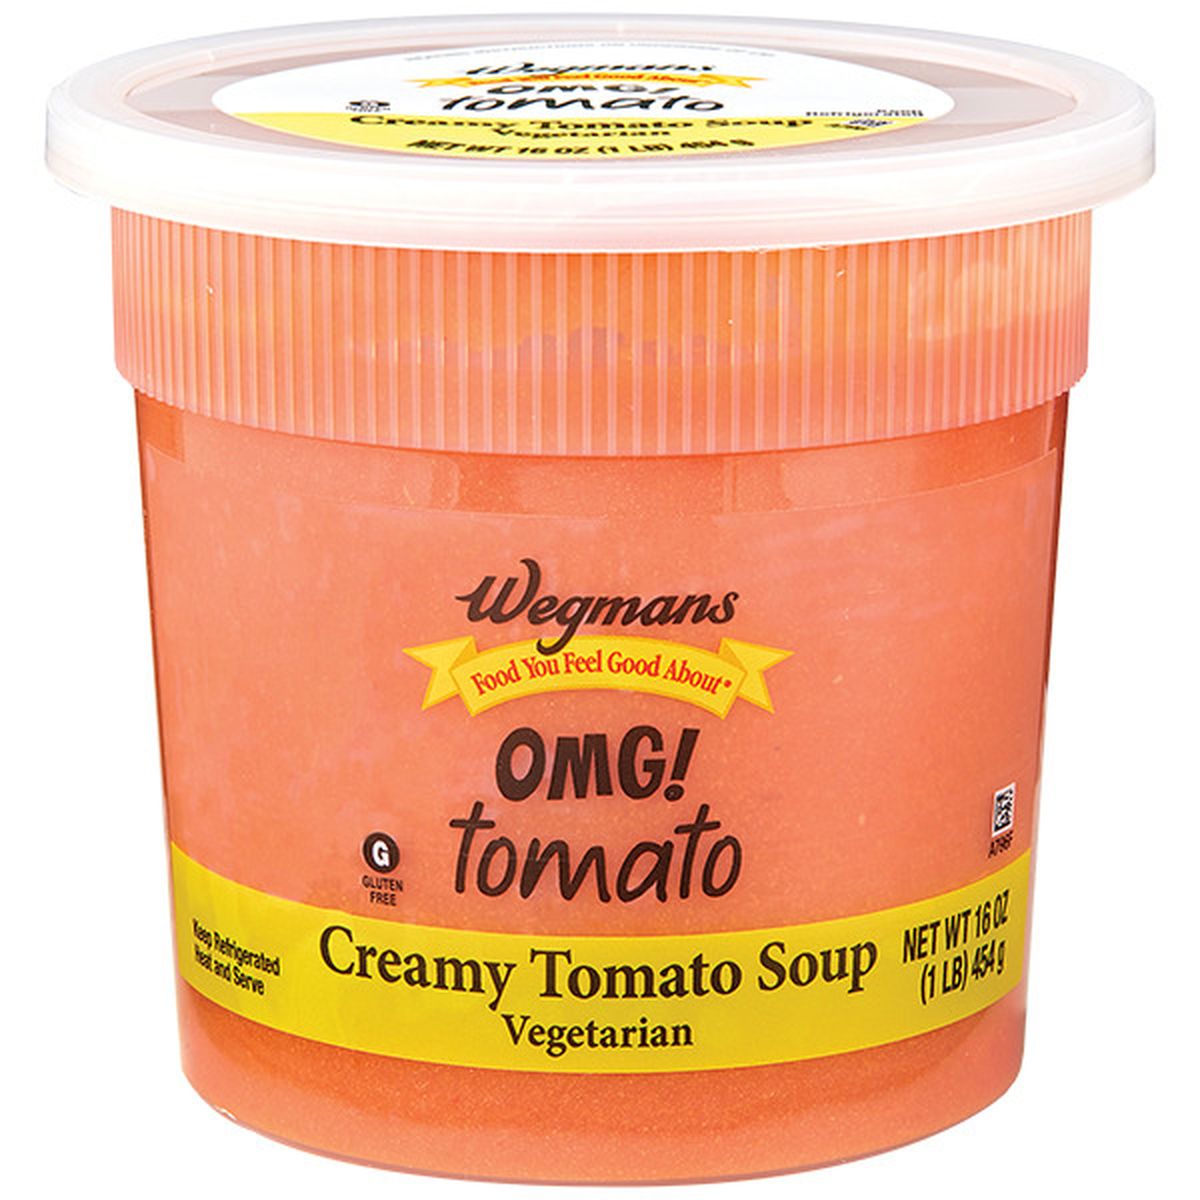 Calories in Wegmans OMG! Tomato Creamy Tomato Soup